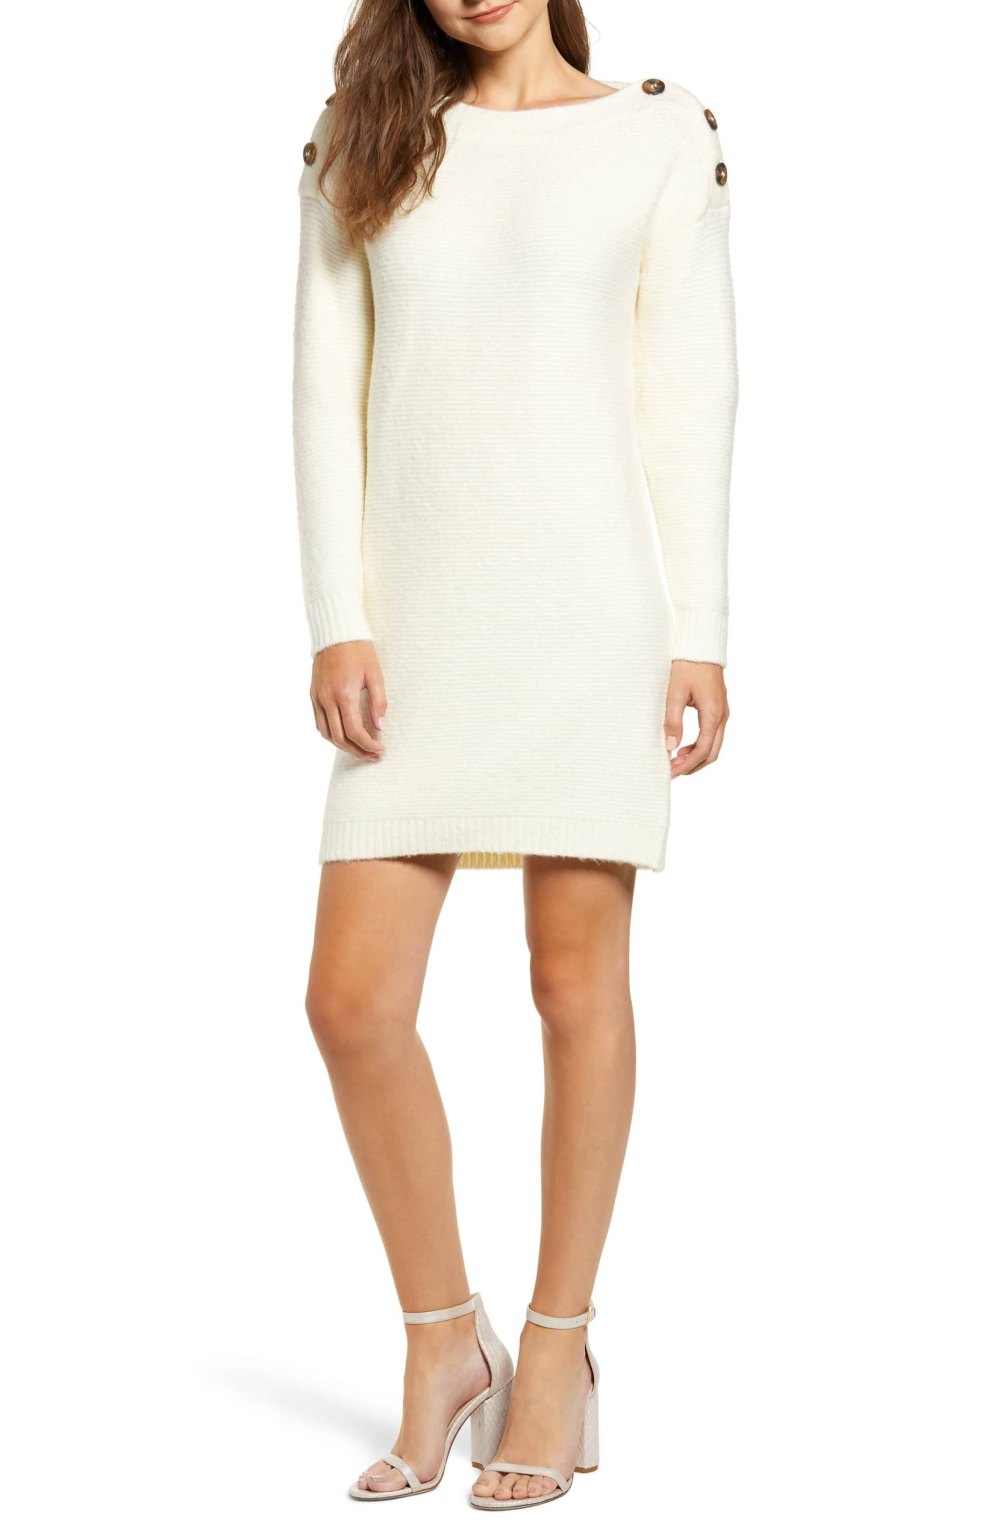 Chriselle Lim Sawyer Sweater Dress